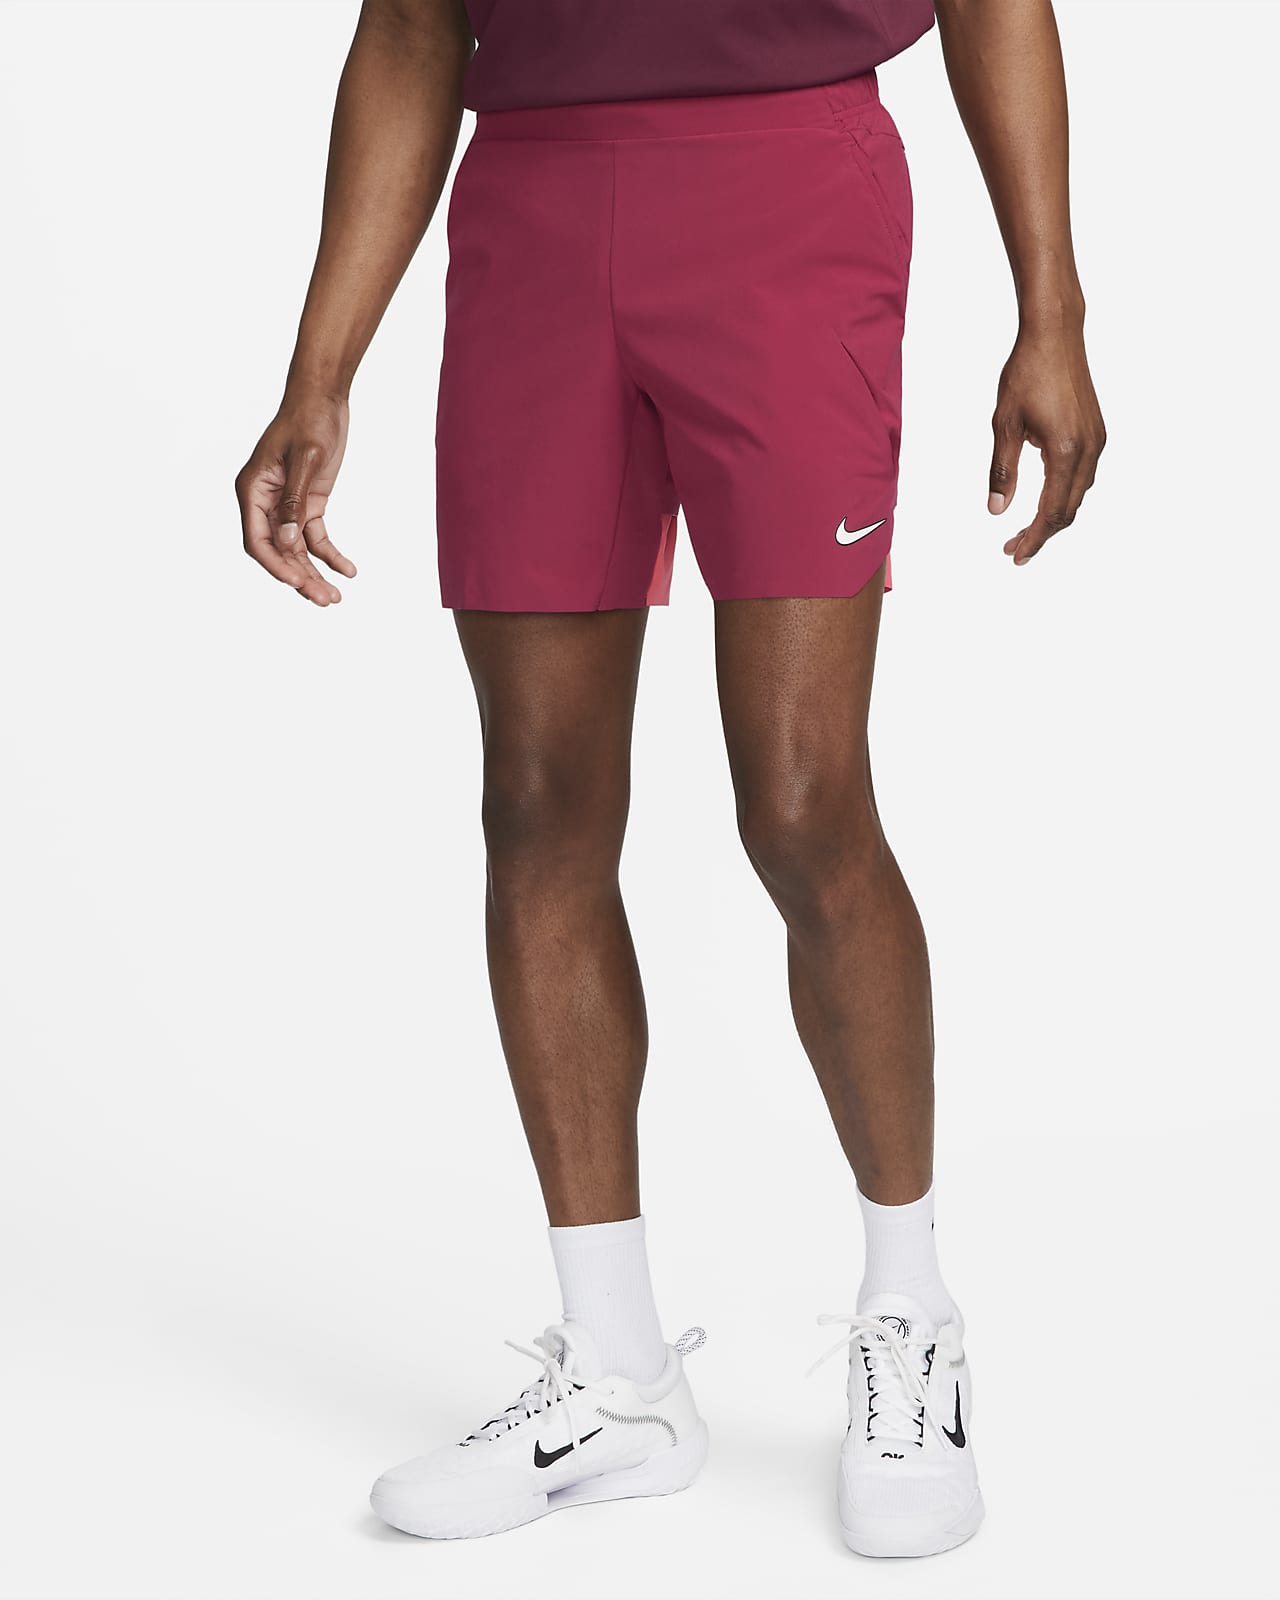 NikeCourt Men's Tennis Trousers. Nike FI